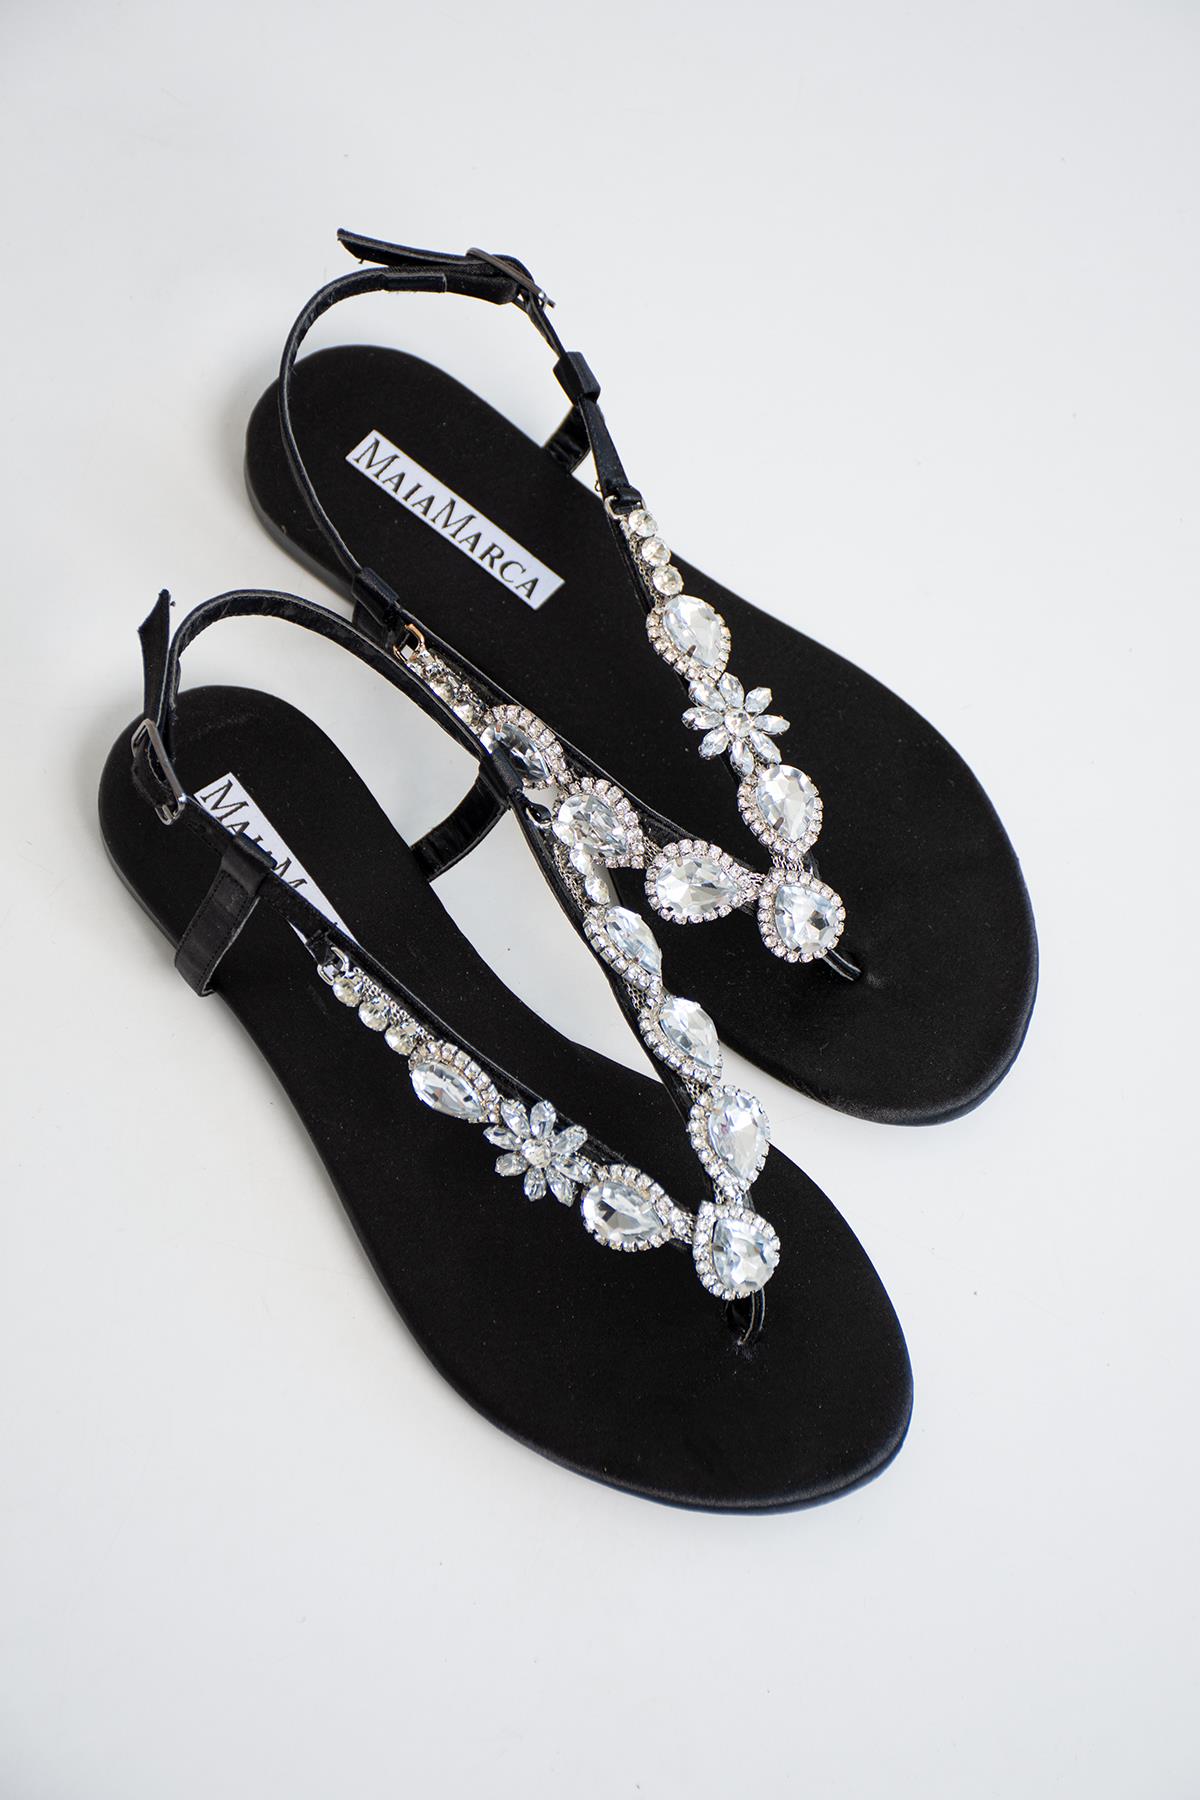 Maia Satin Black Stone Sandals